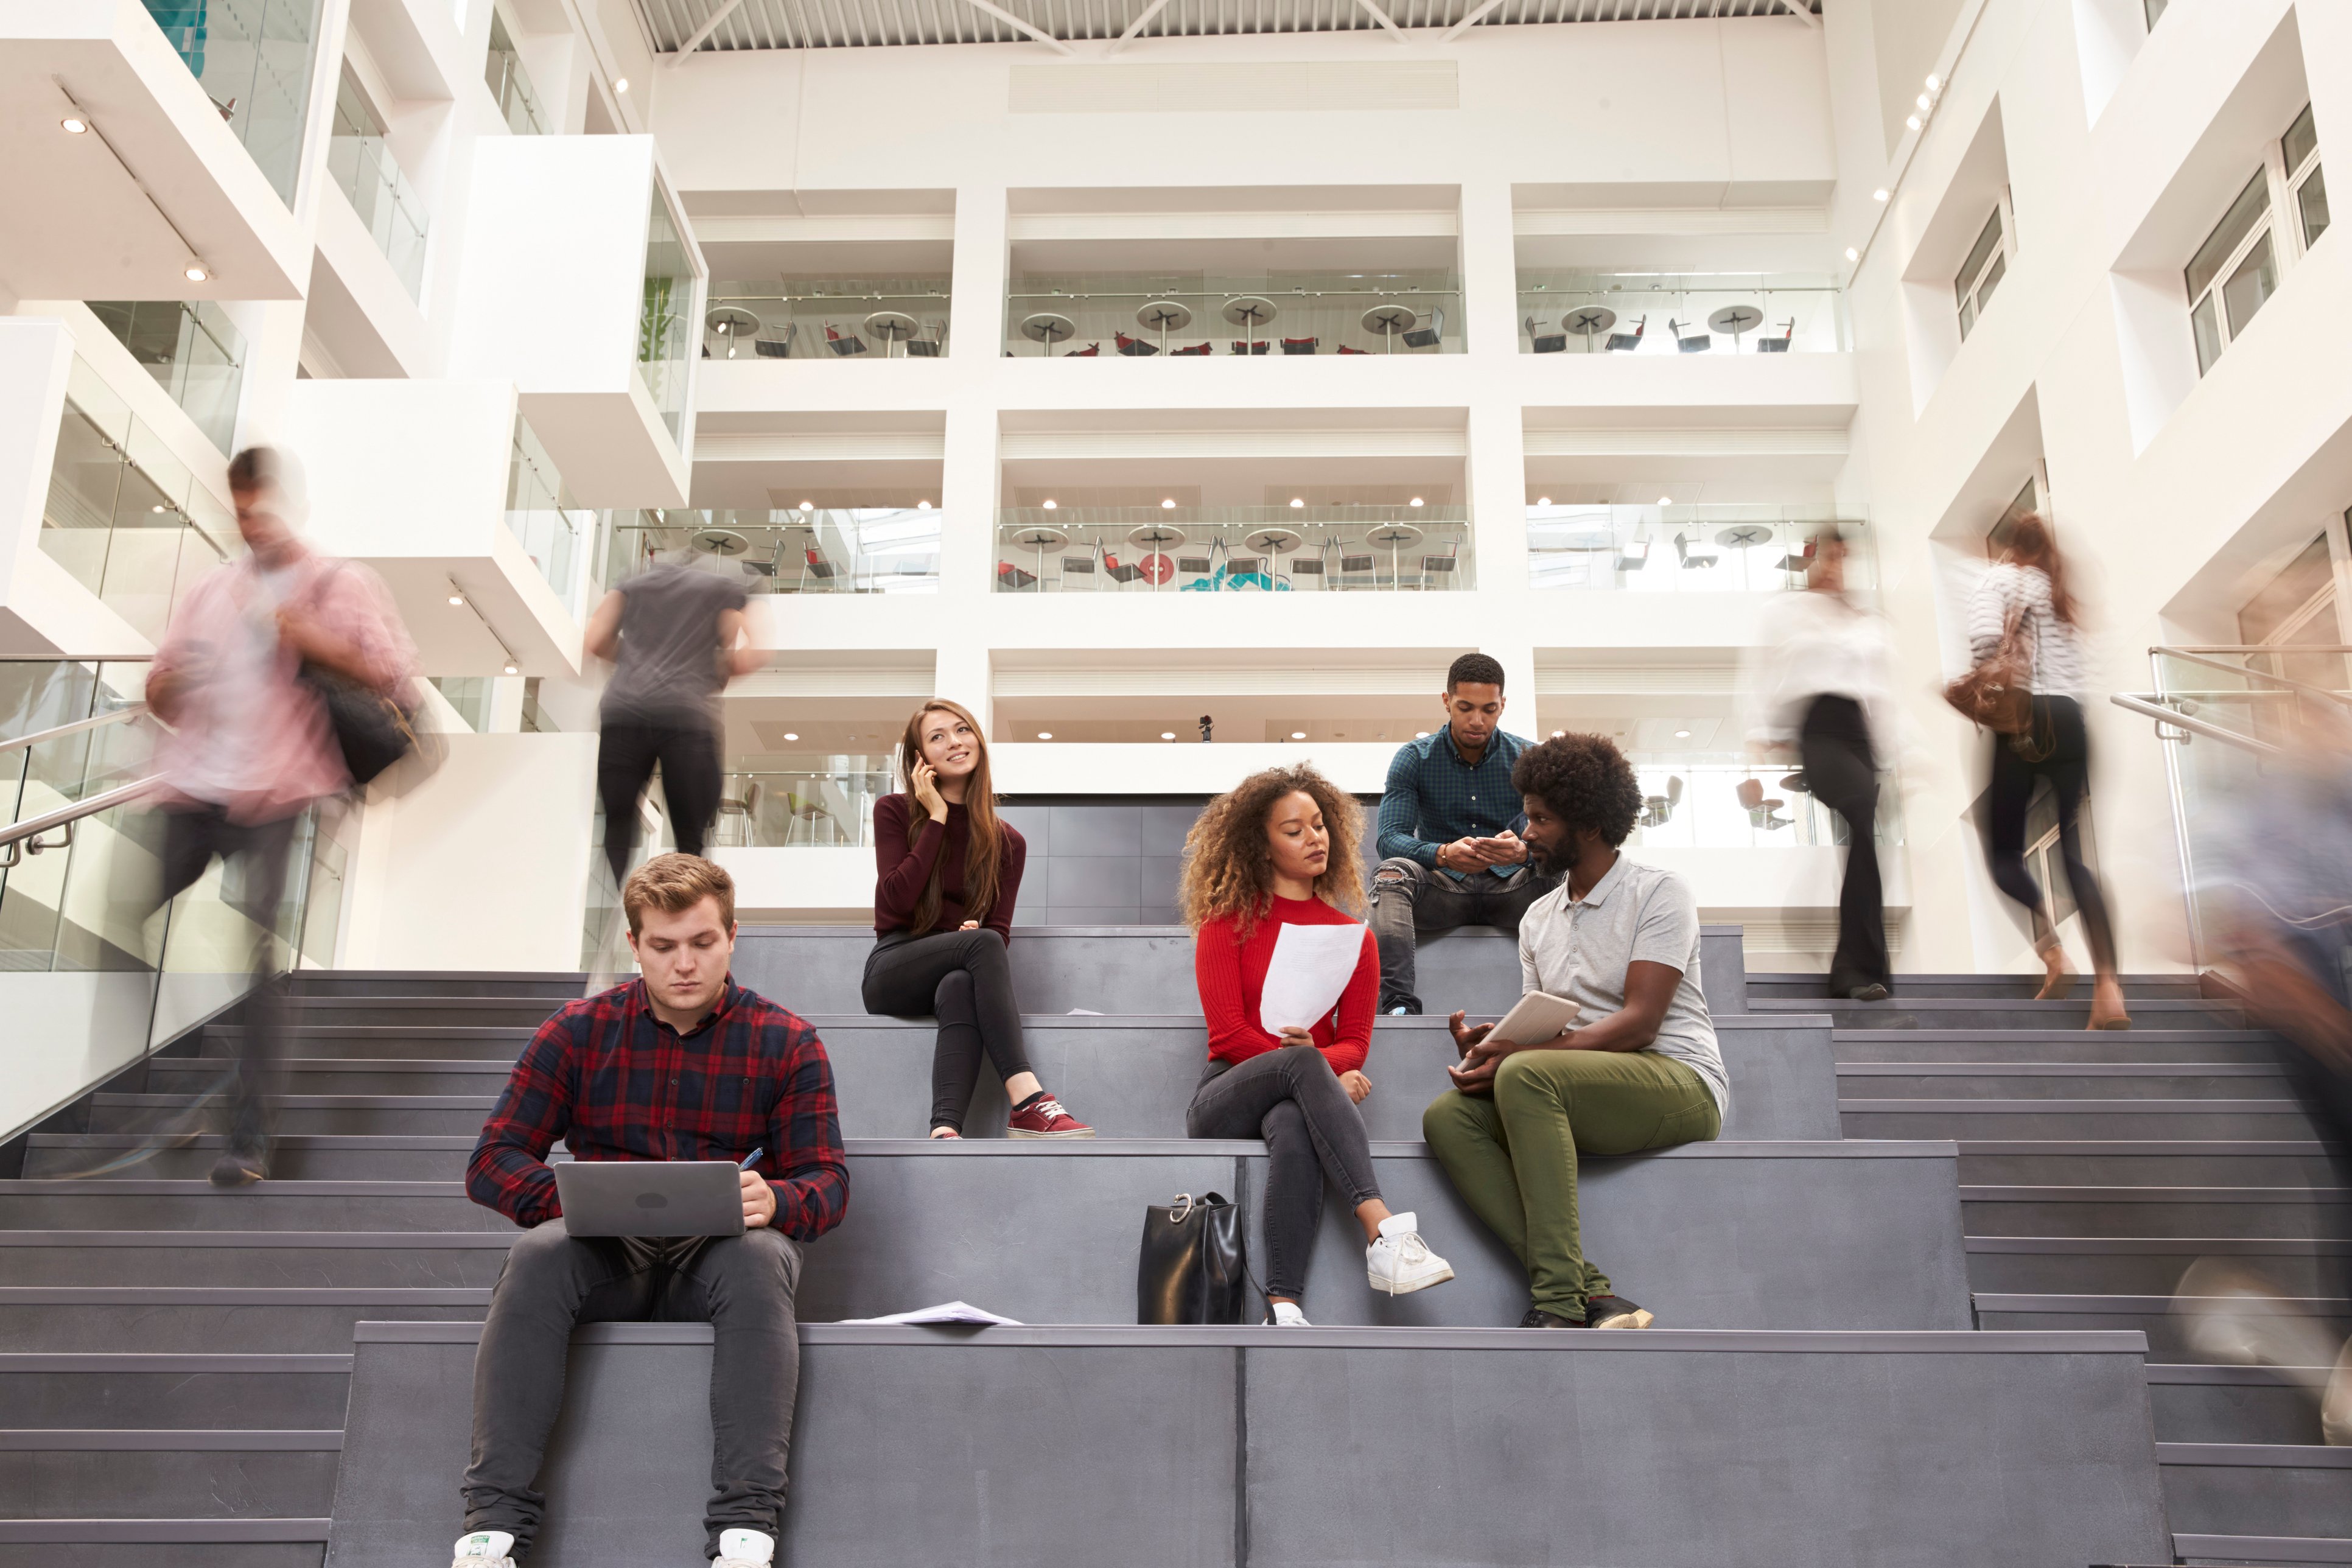 University Campus Students using Wi-Fi